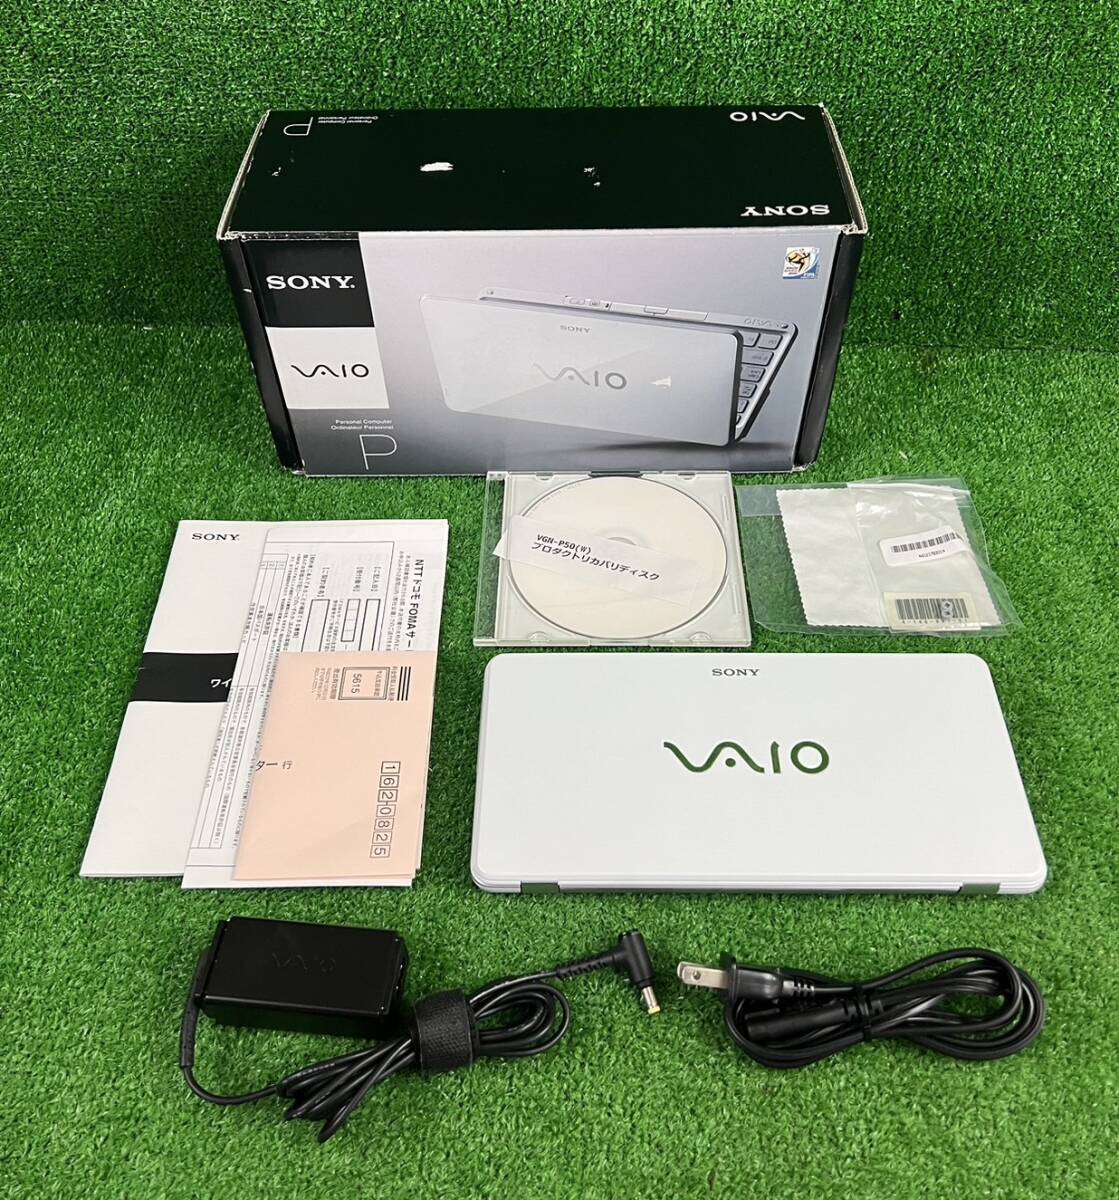 SONY VAIO Type P VGN-P50 WindowsXP 8 type Small PC Laptops Netbooks With box